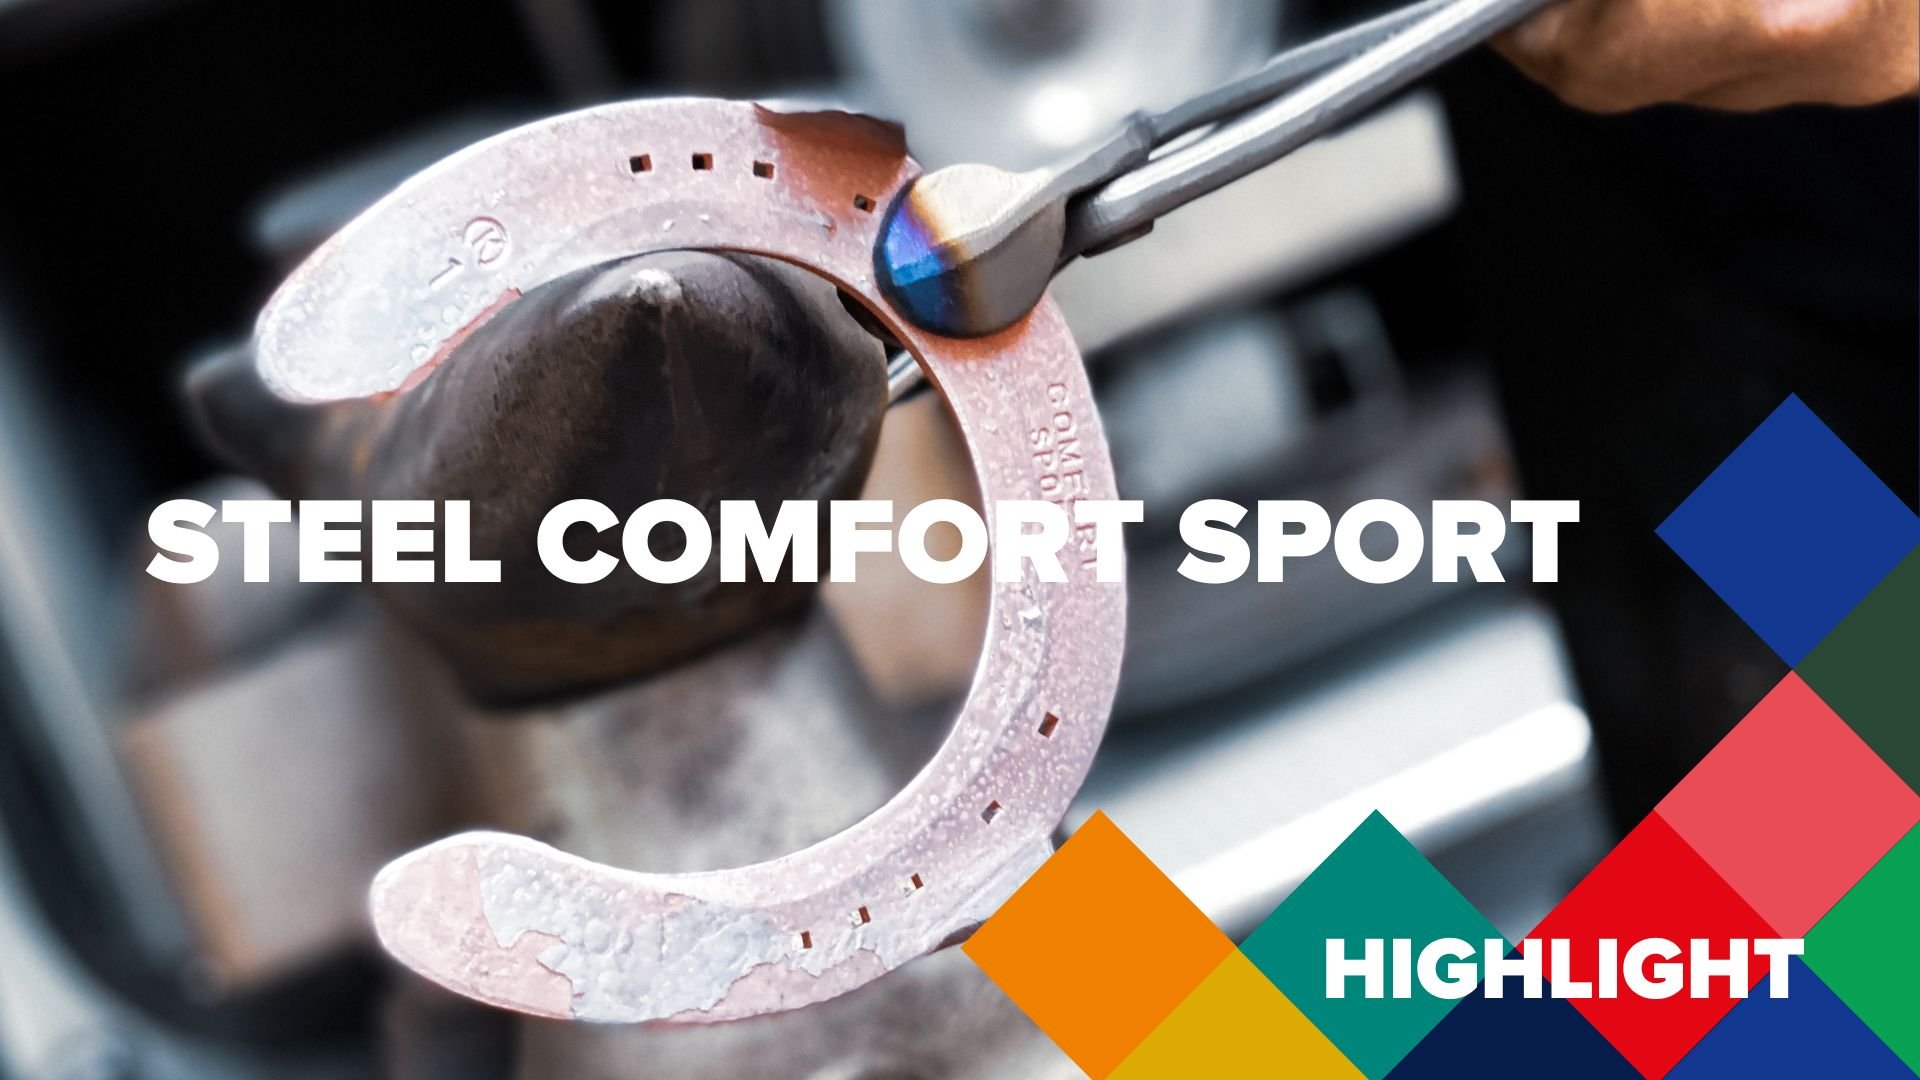 Steel Comfort Sport (highlight)